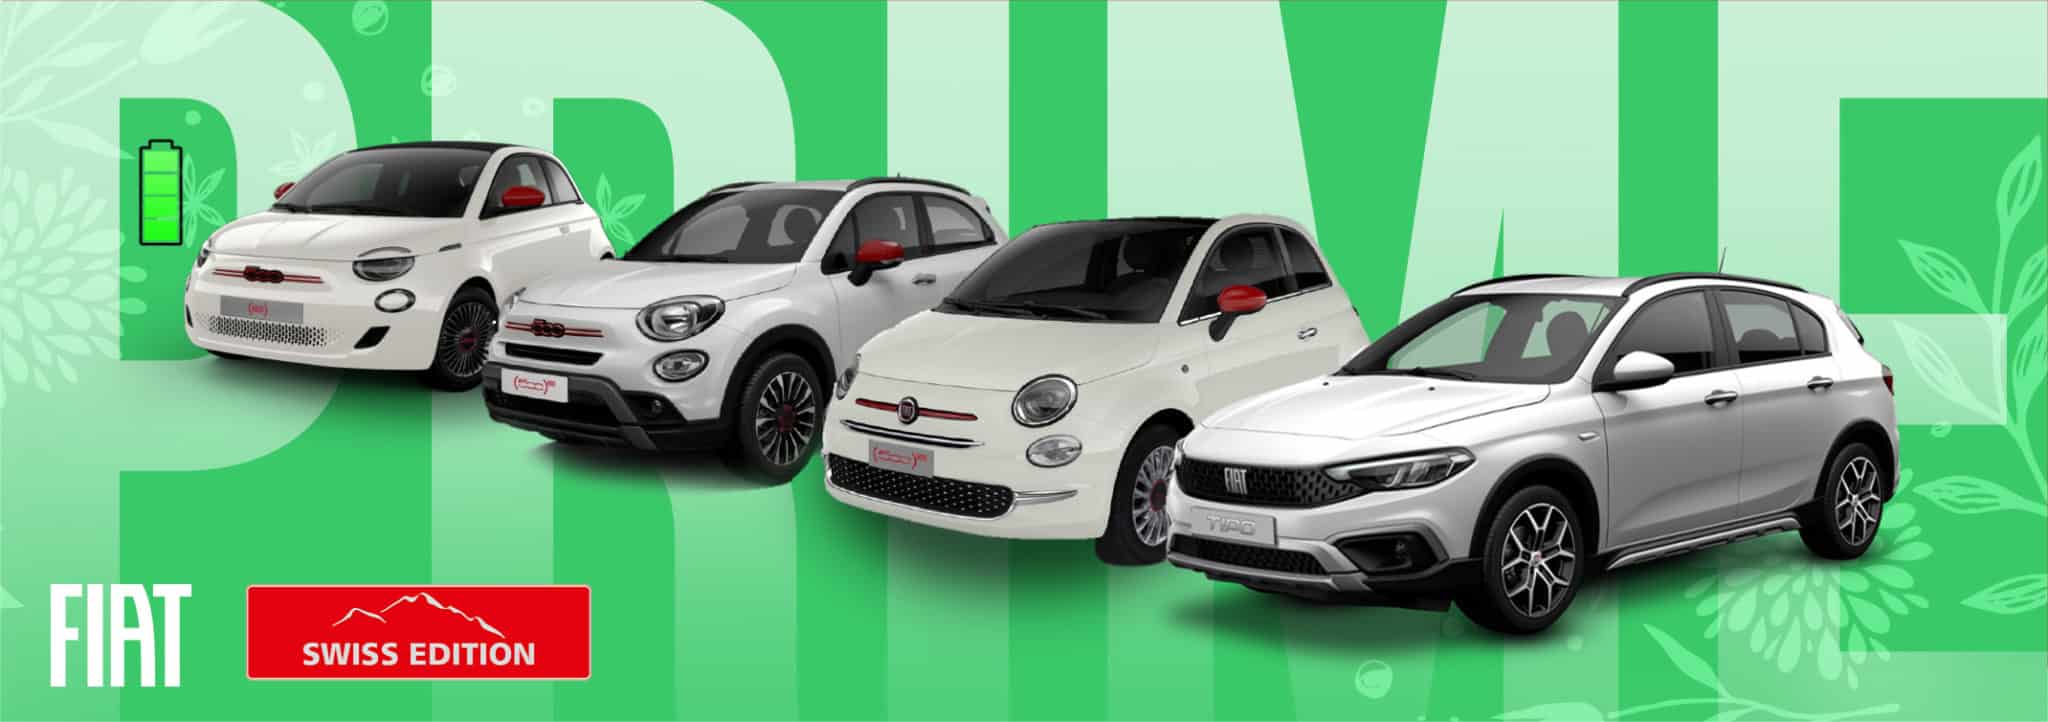 Fiat Swiss Edition